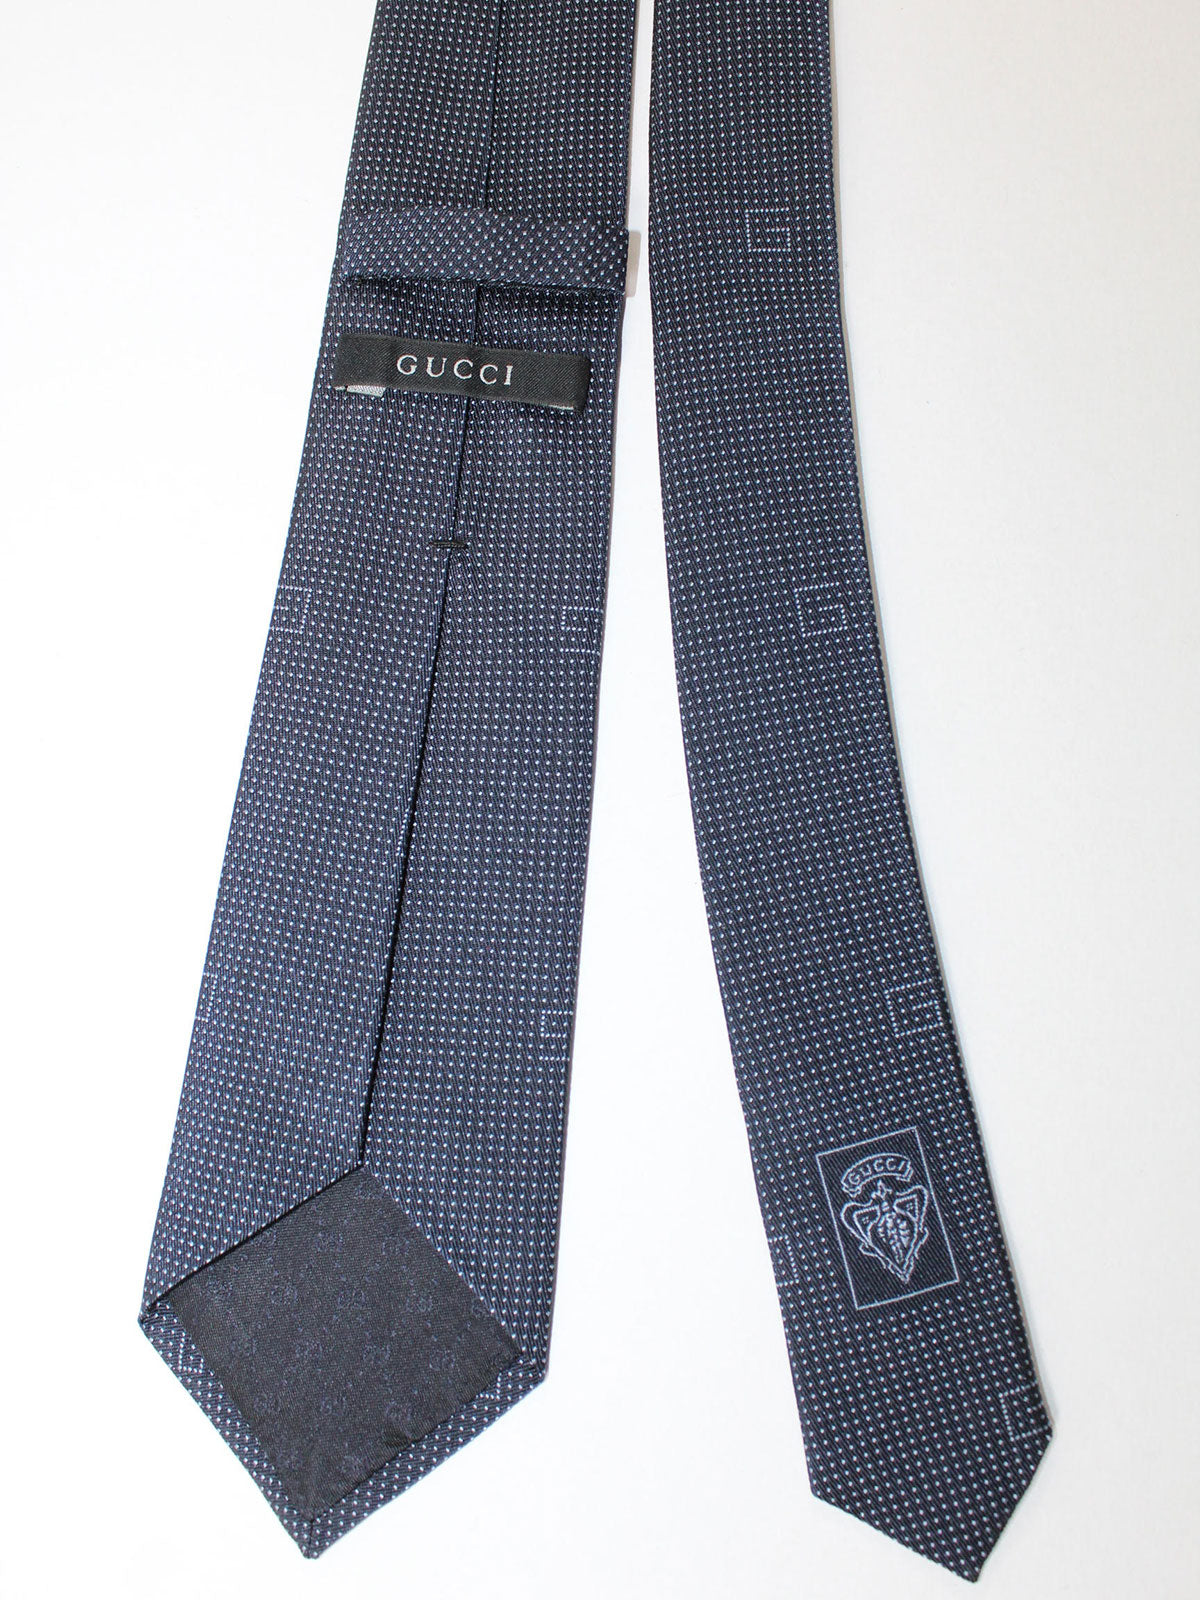 Gucci Silk Tie Navy G Mini Dots Design Sale Tie Deals